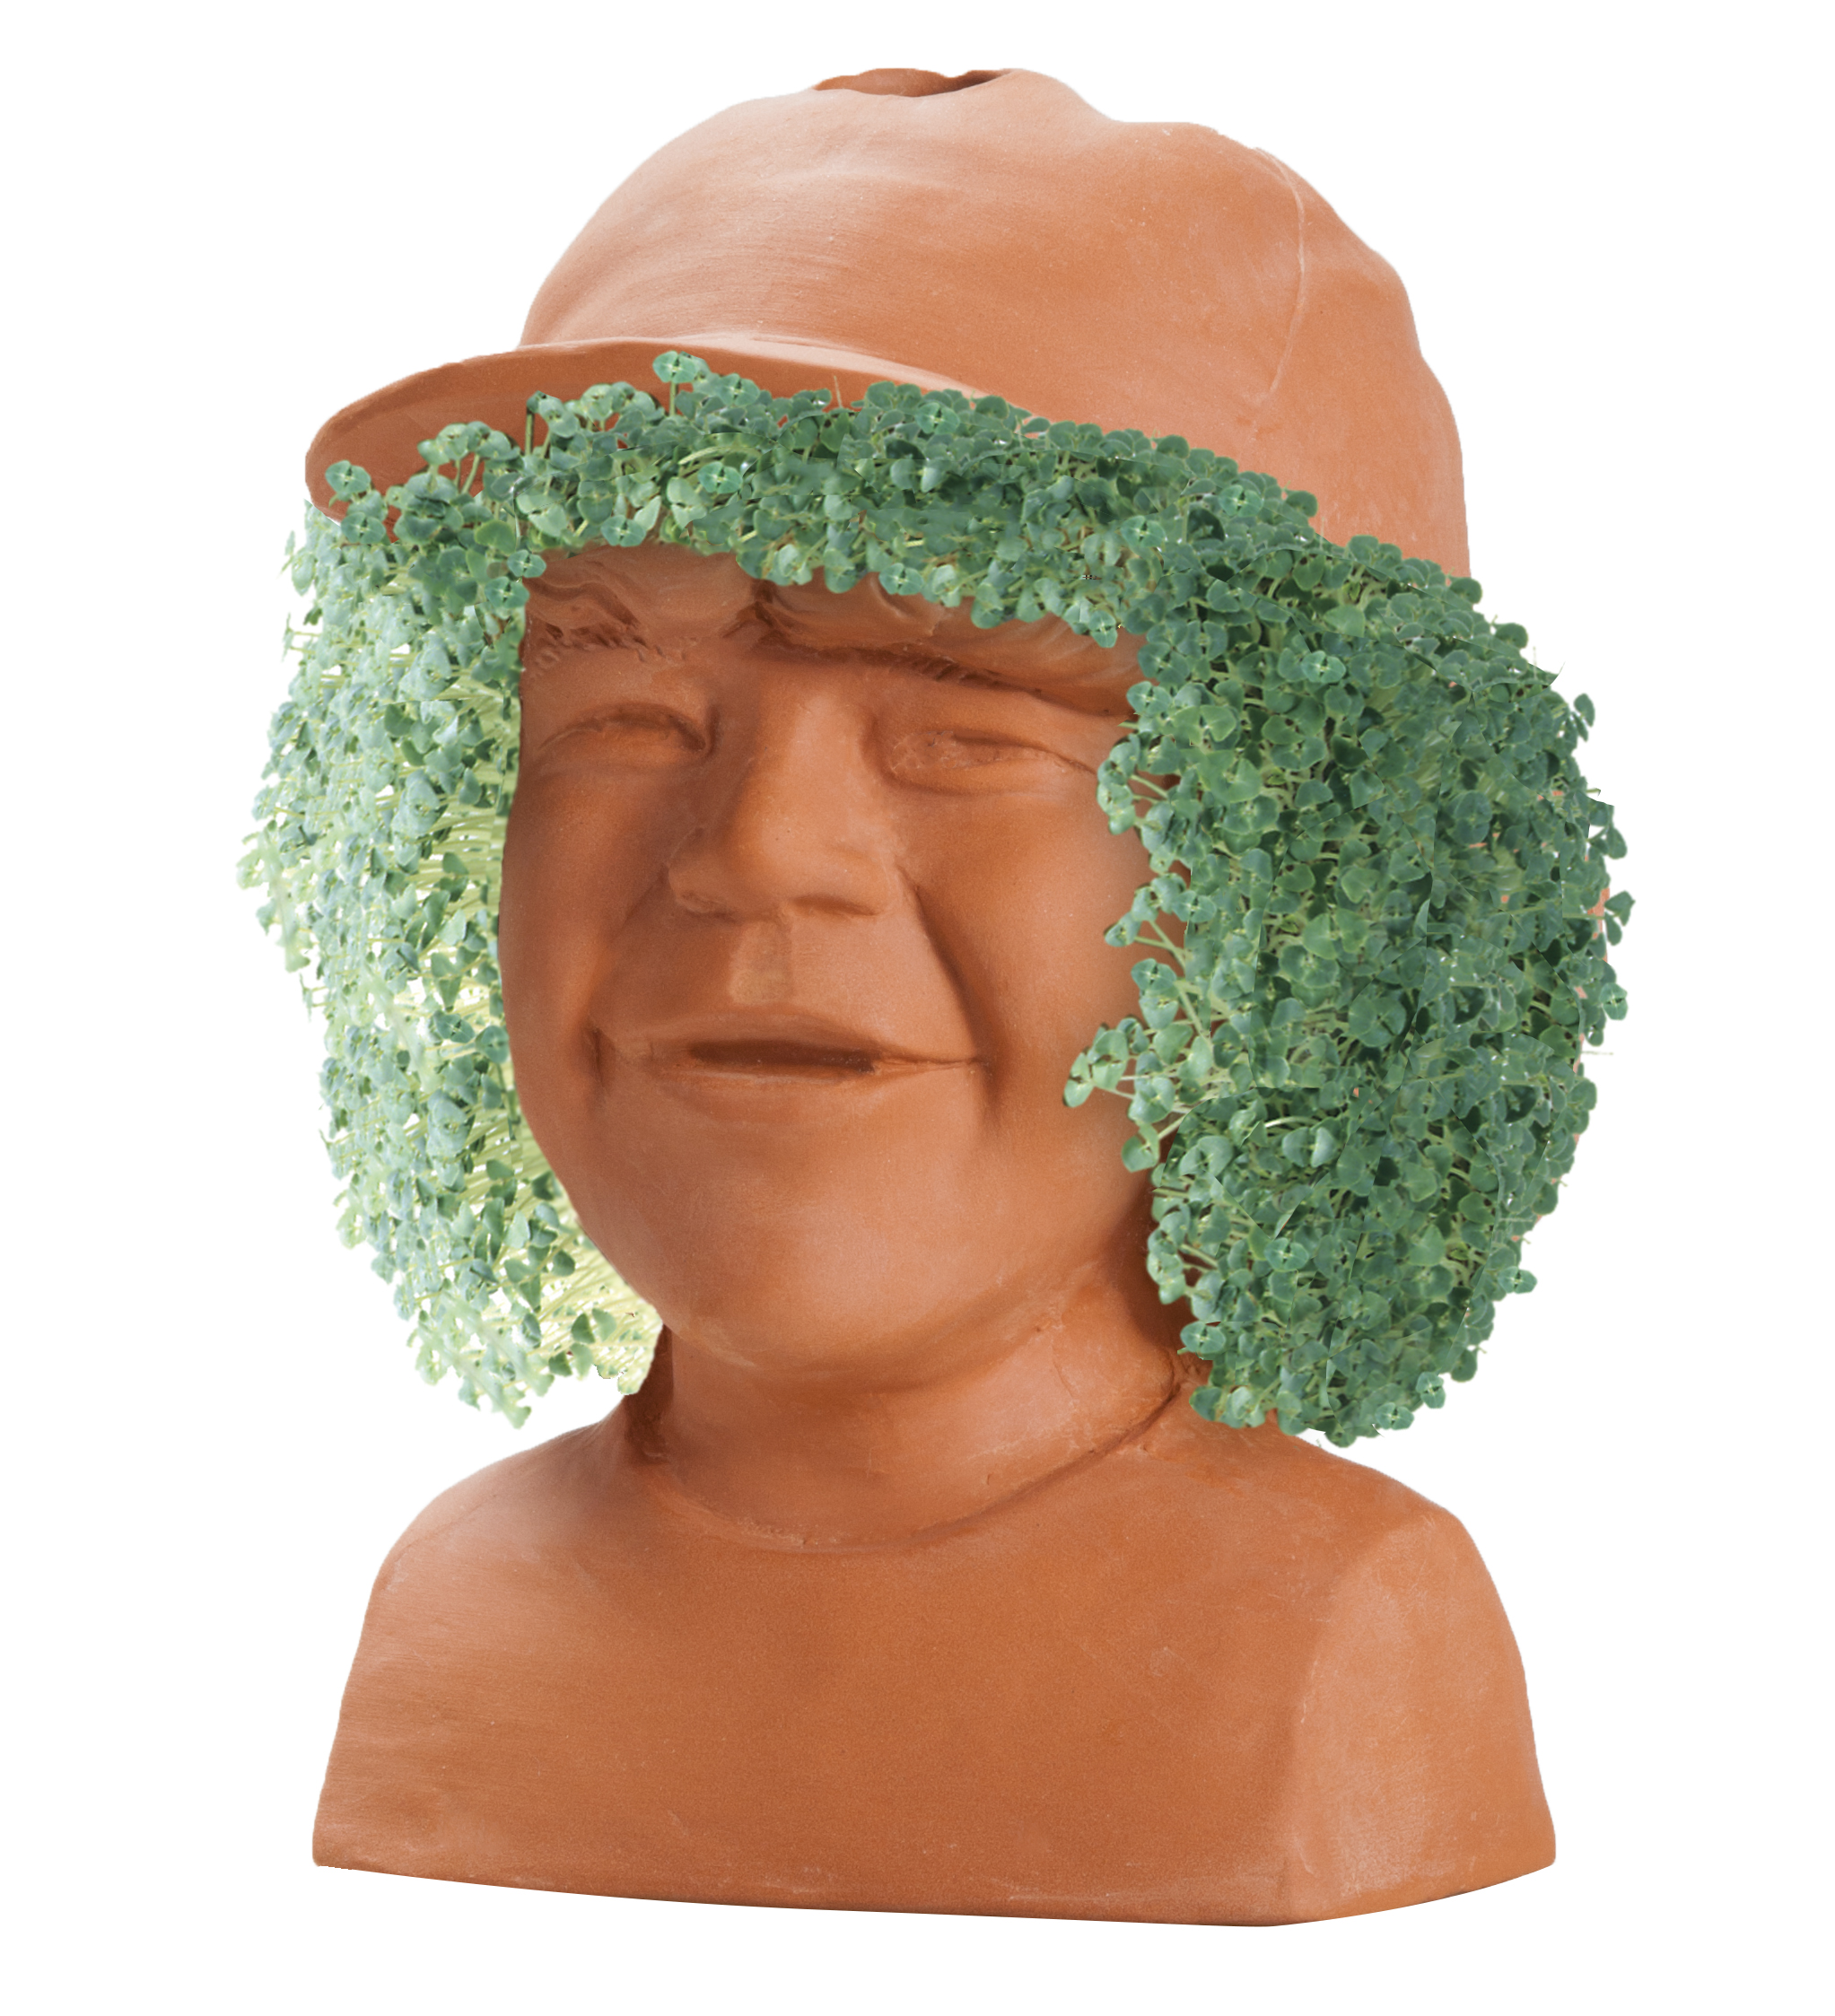 Chia Pet Dustin (Stranger Things) - Decorative Pot Easy to Do Fun to Grow Chia Seeds - image 3 of 9